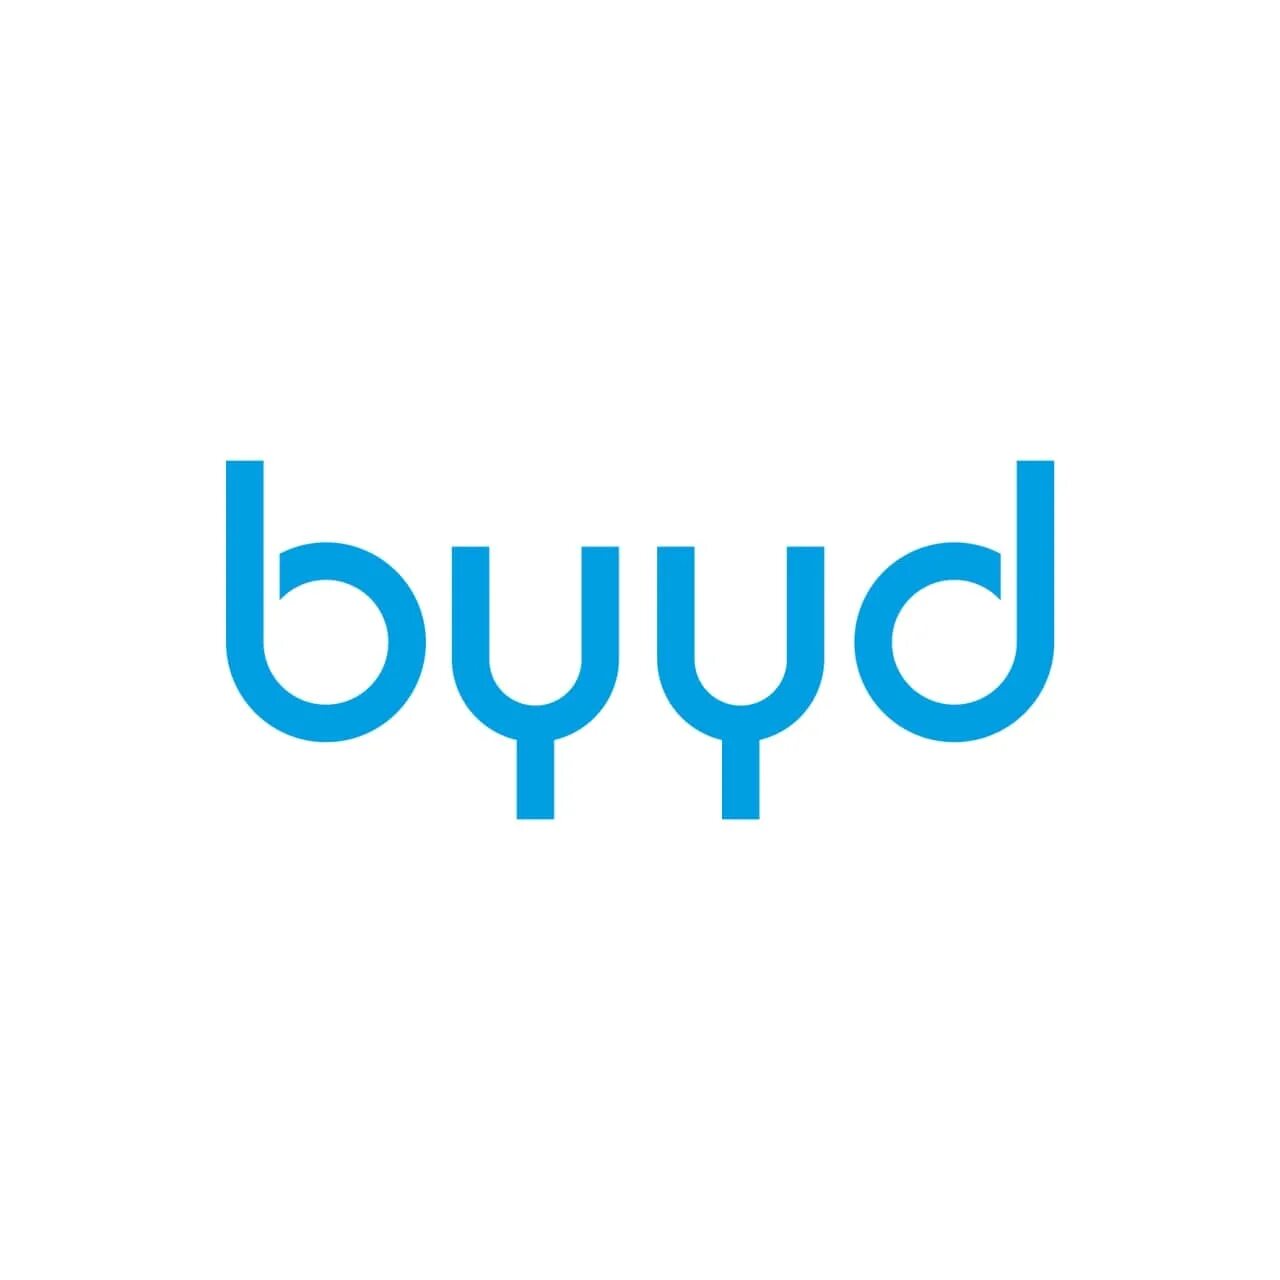 Byyd. BYYD mobile. BYYD mobile logo. BYYD logo PNG. Anymed лого.